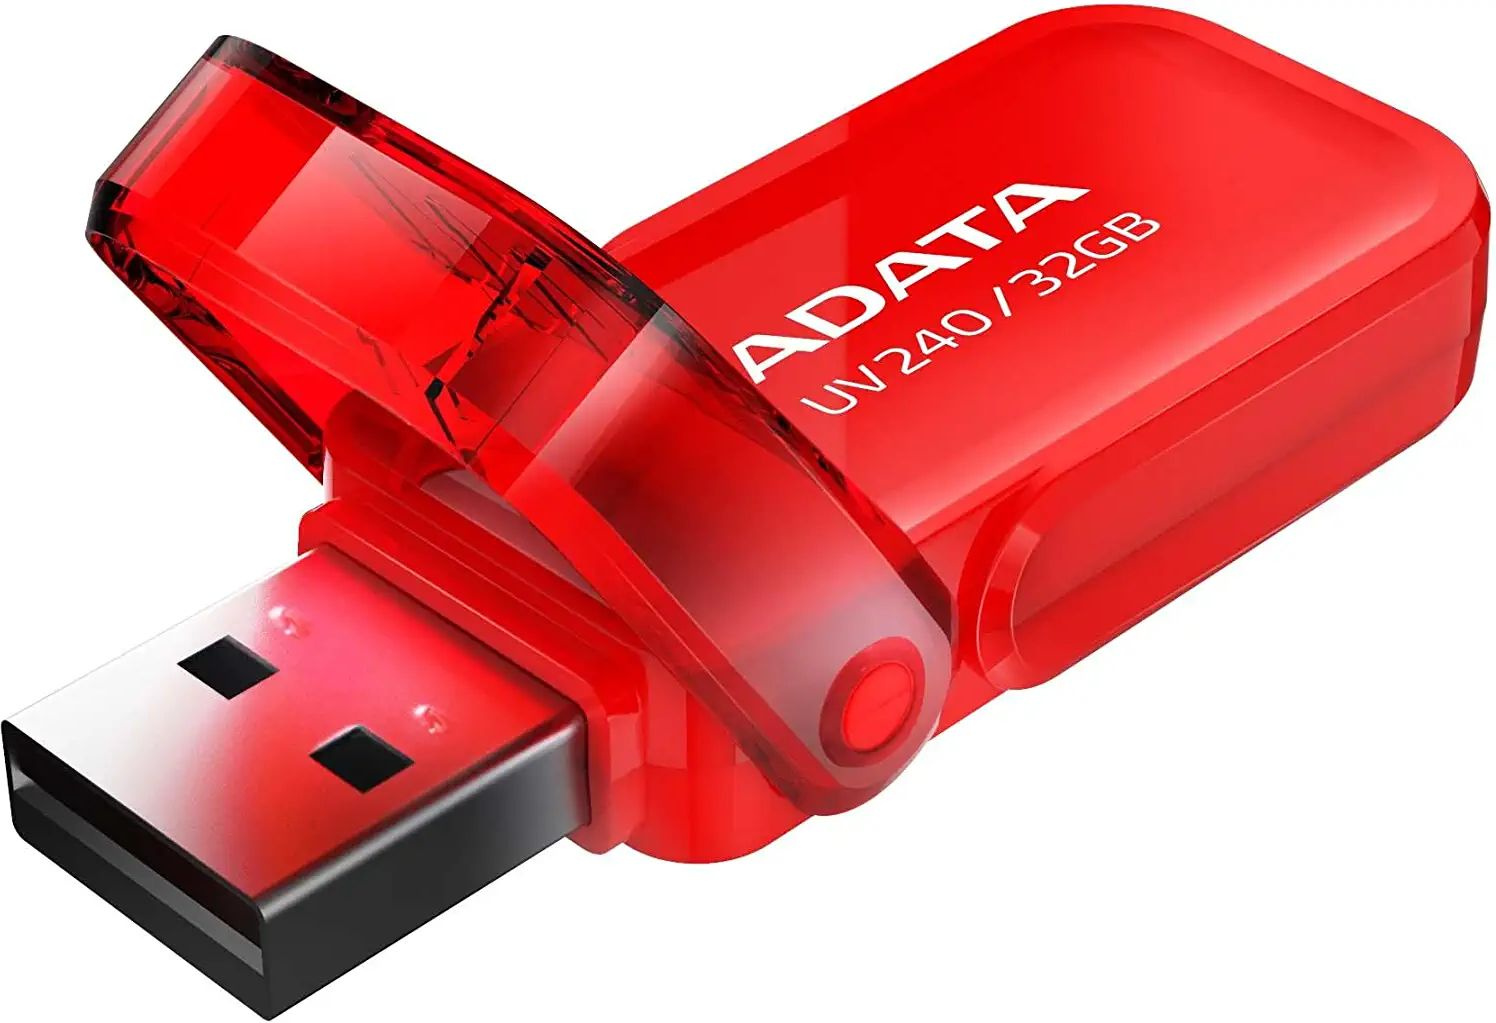 Флеш Диск A-Data 32Gb UV240 AUV240-32G-RRD USB2.0, красный